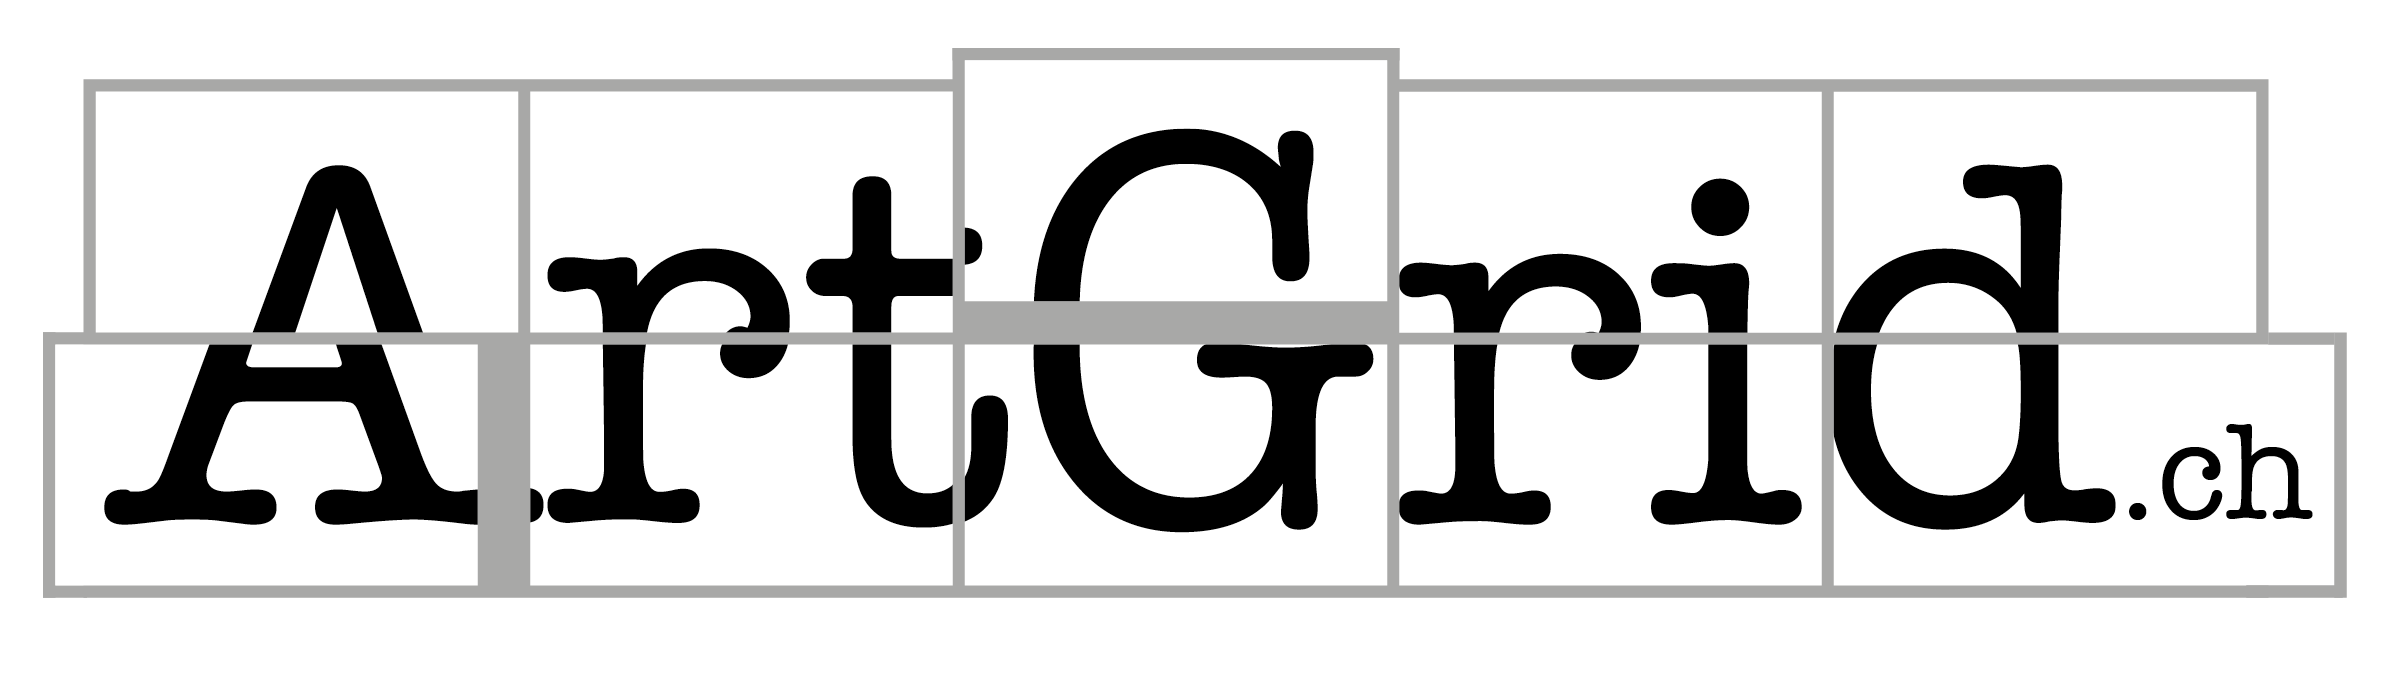 ArtGrid Wort-Bild-Marke Logo